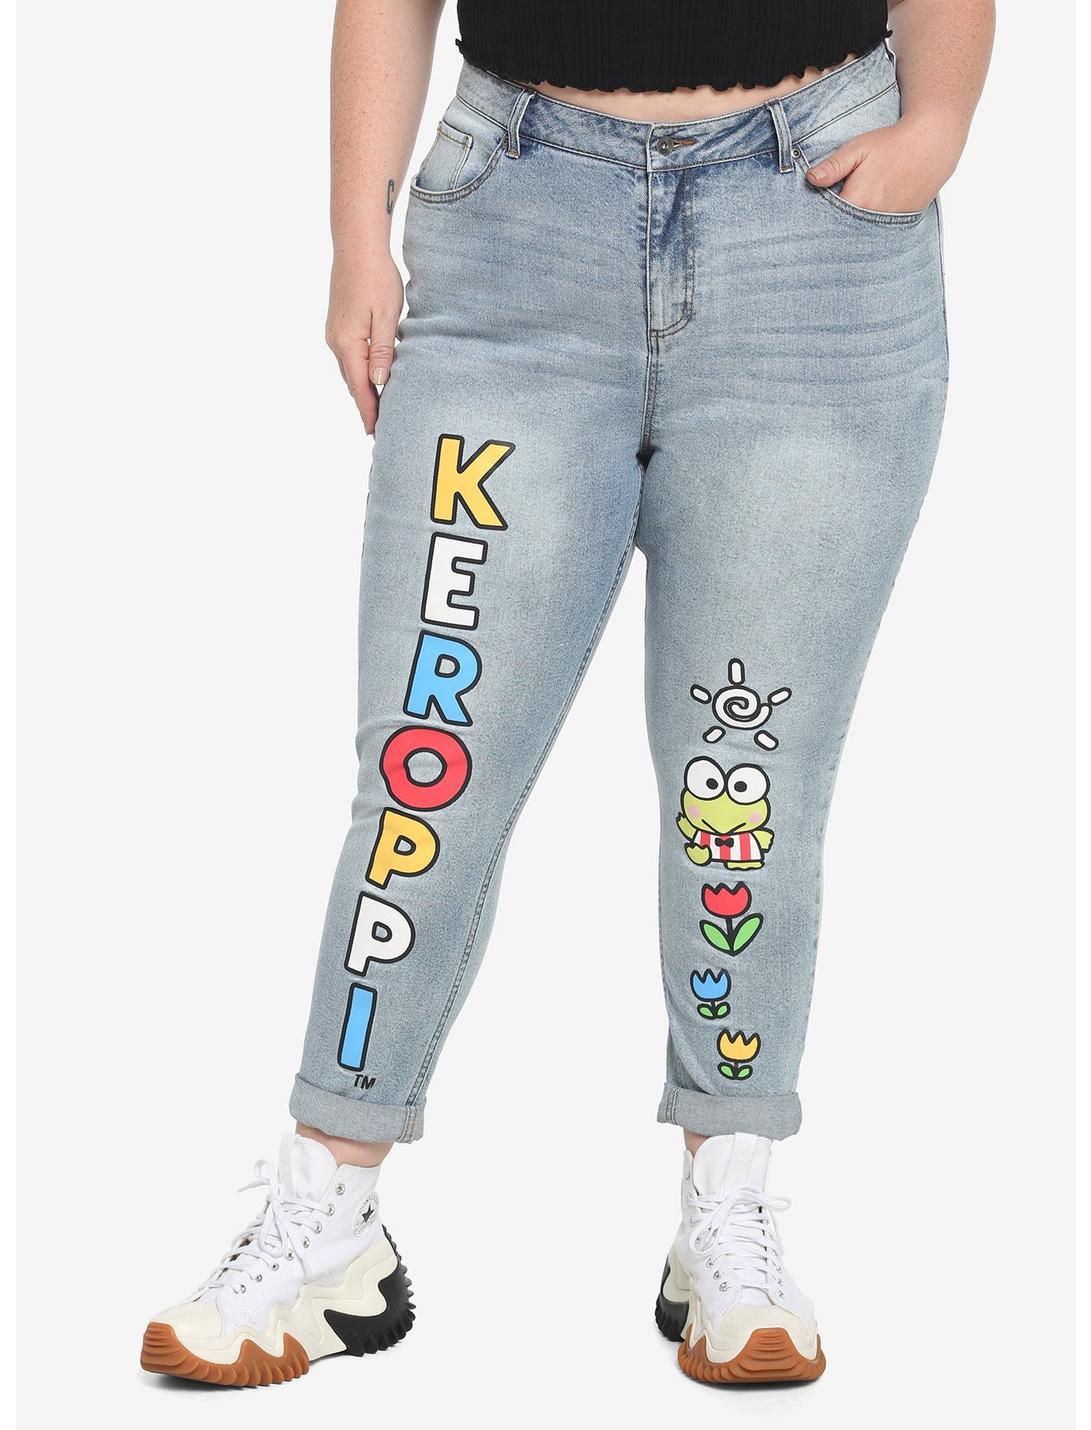 Keroppi Name Mom Jeans Plus Size, LIGHT WASH, hi-res